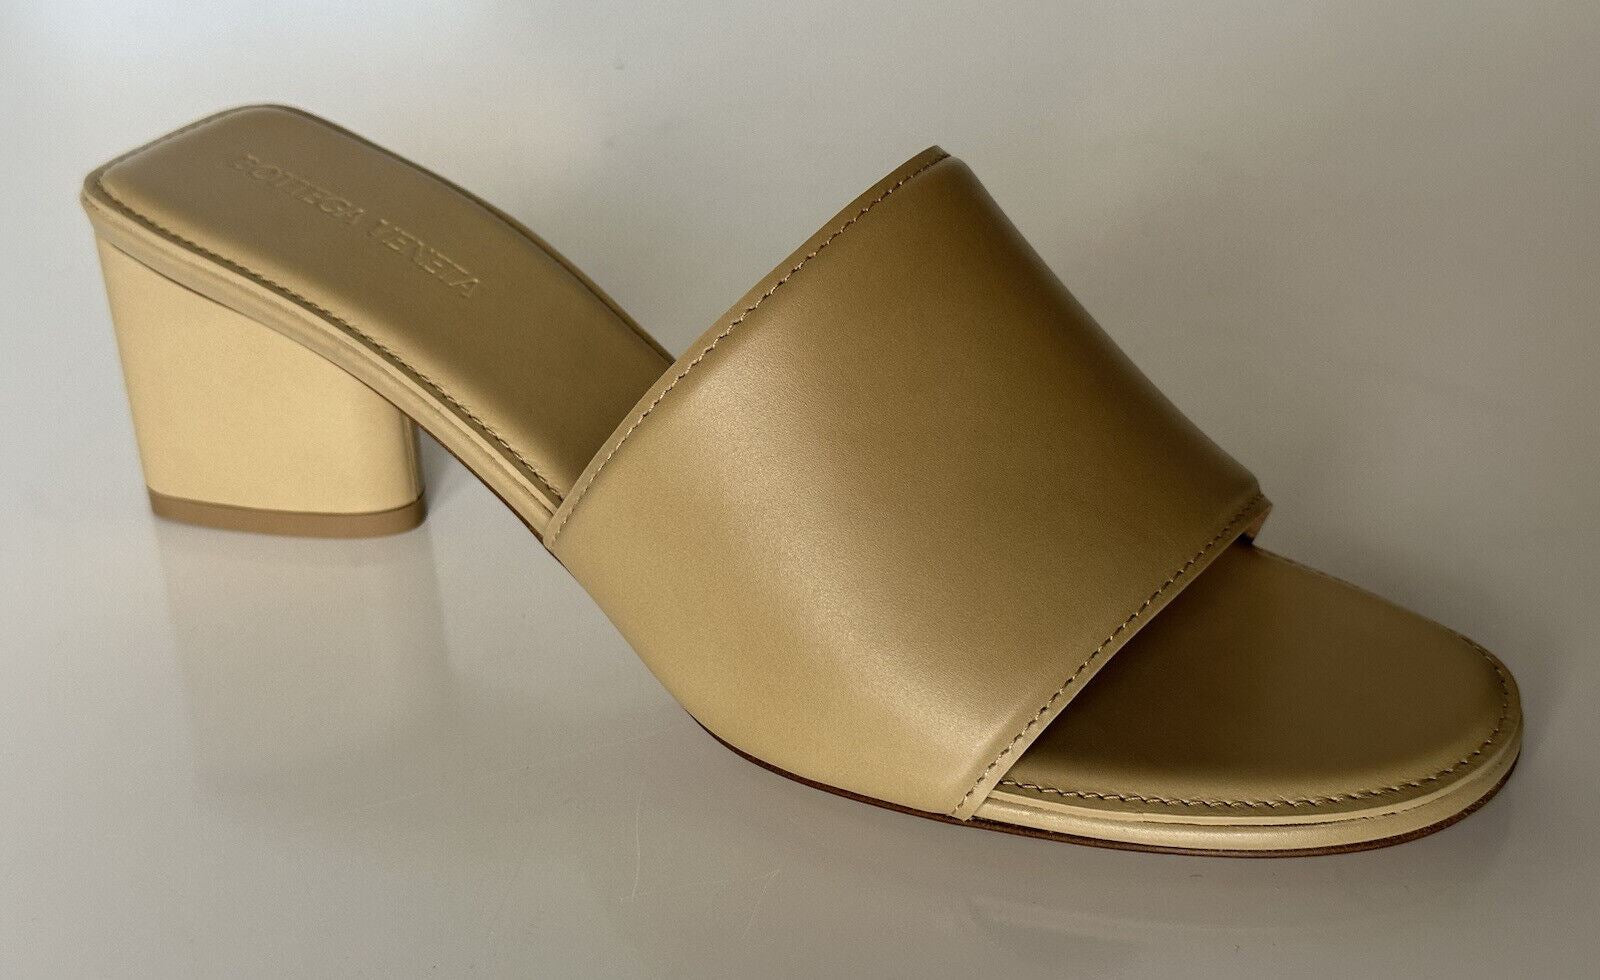 NIB $760 Bottega Veneta Calf Leather Sandals Shoes Cane Sugar 9 US 651378 Italy